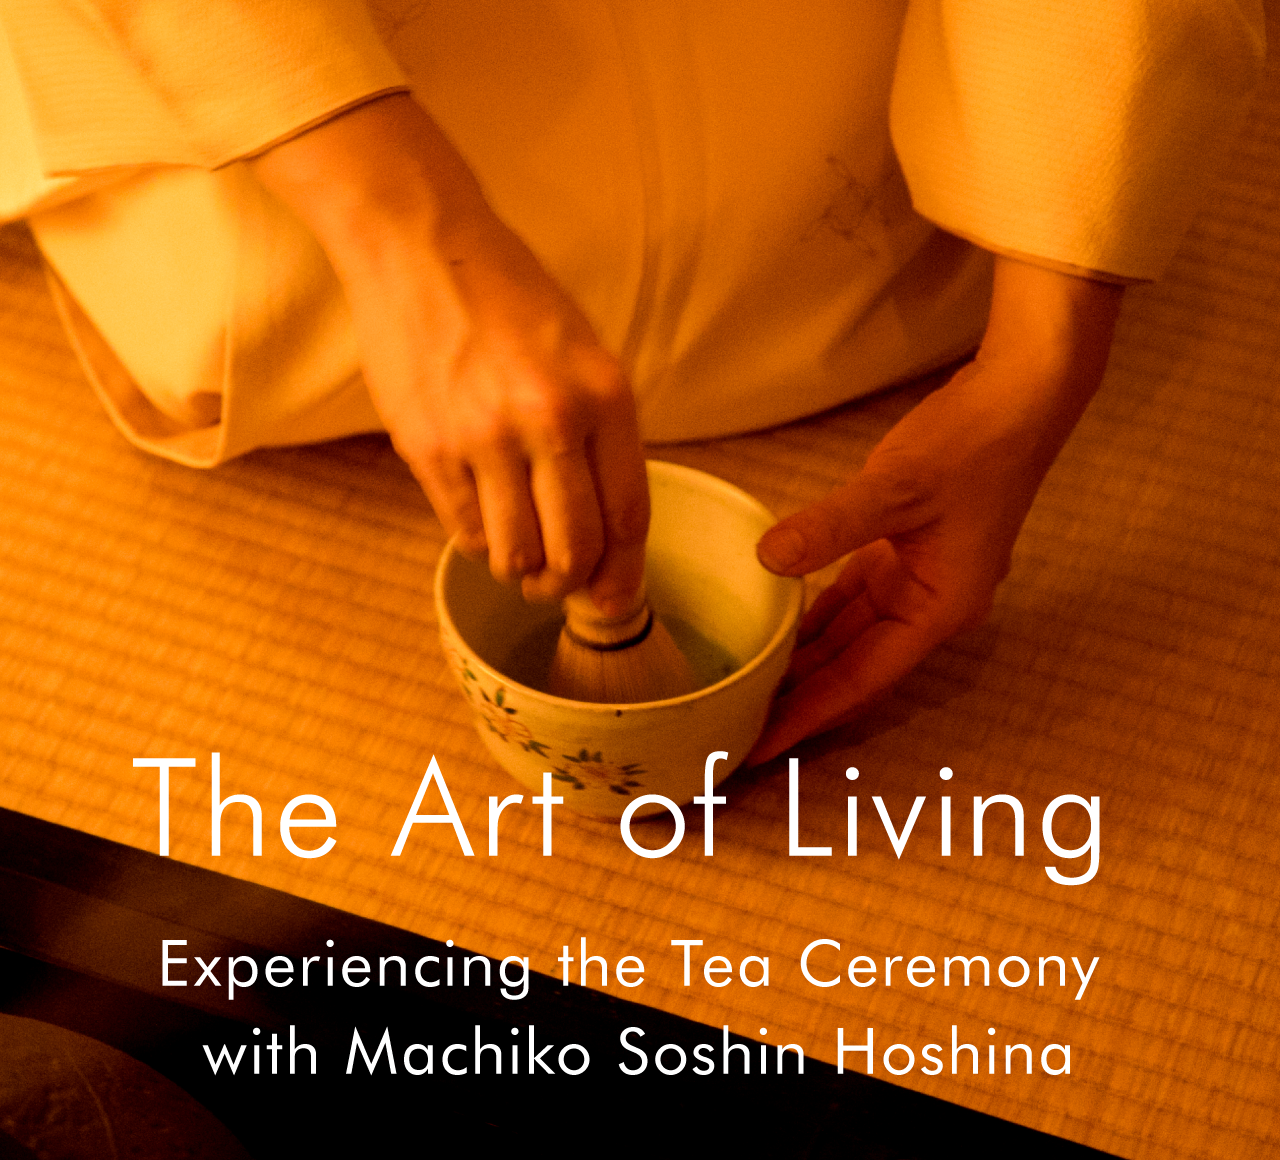 The Art of Living Experiencing the Tea Ceremony with Machiko Soshin Hoshina